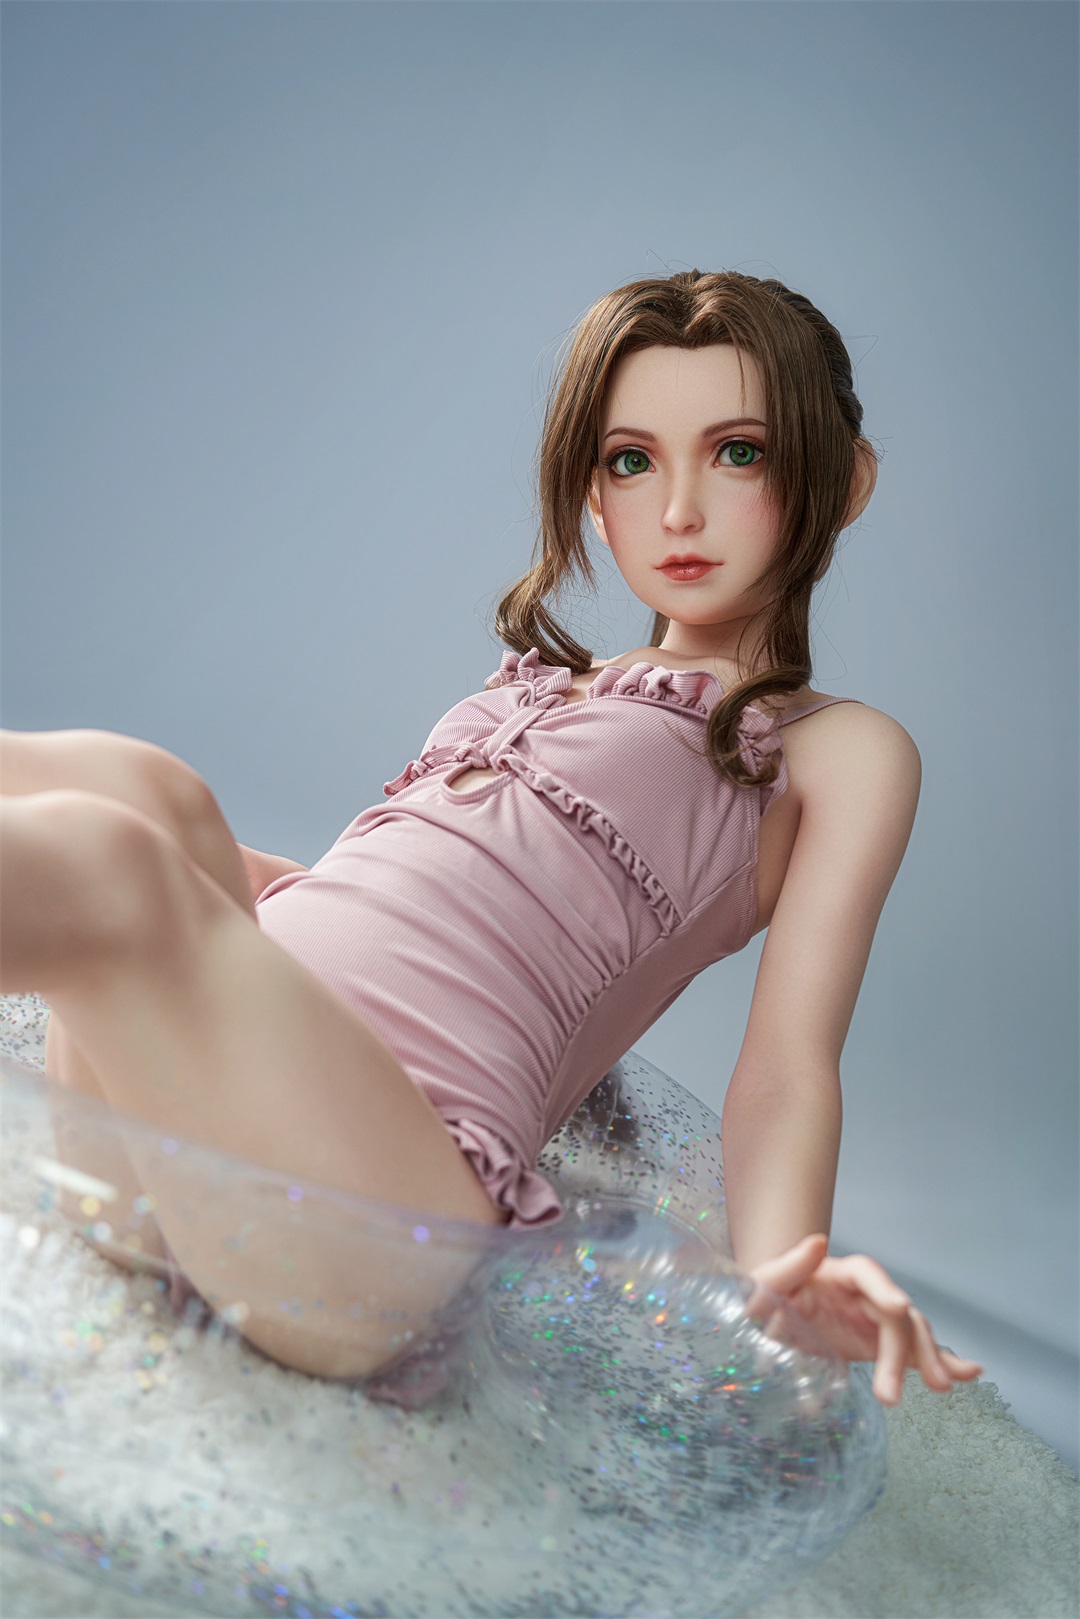 4ft 7/142cm Anime Silicone Head Realistic Sex Doll-Aerith